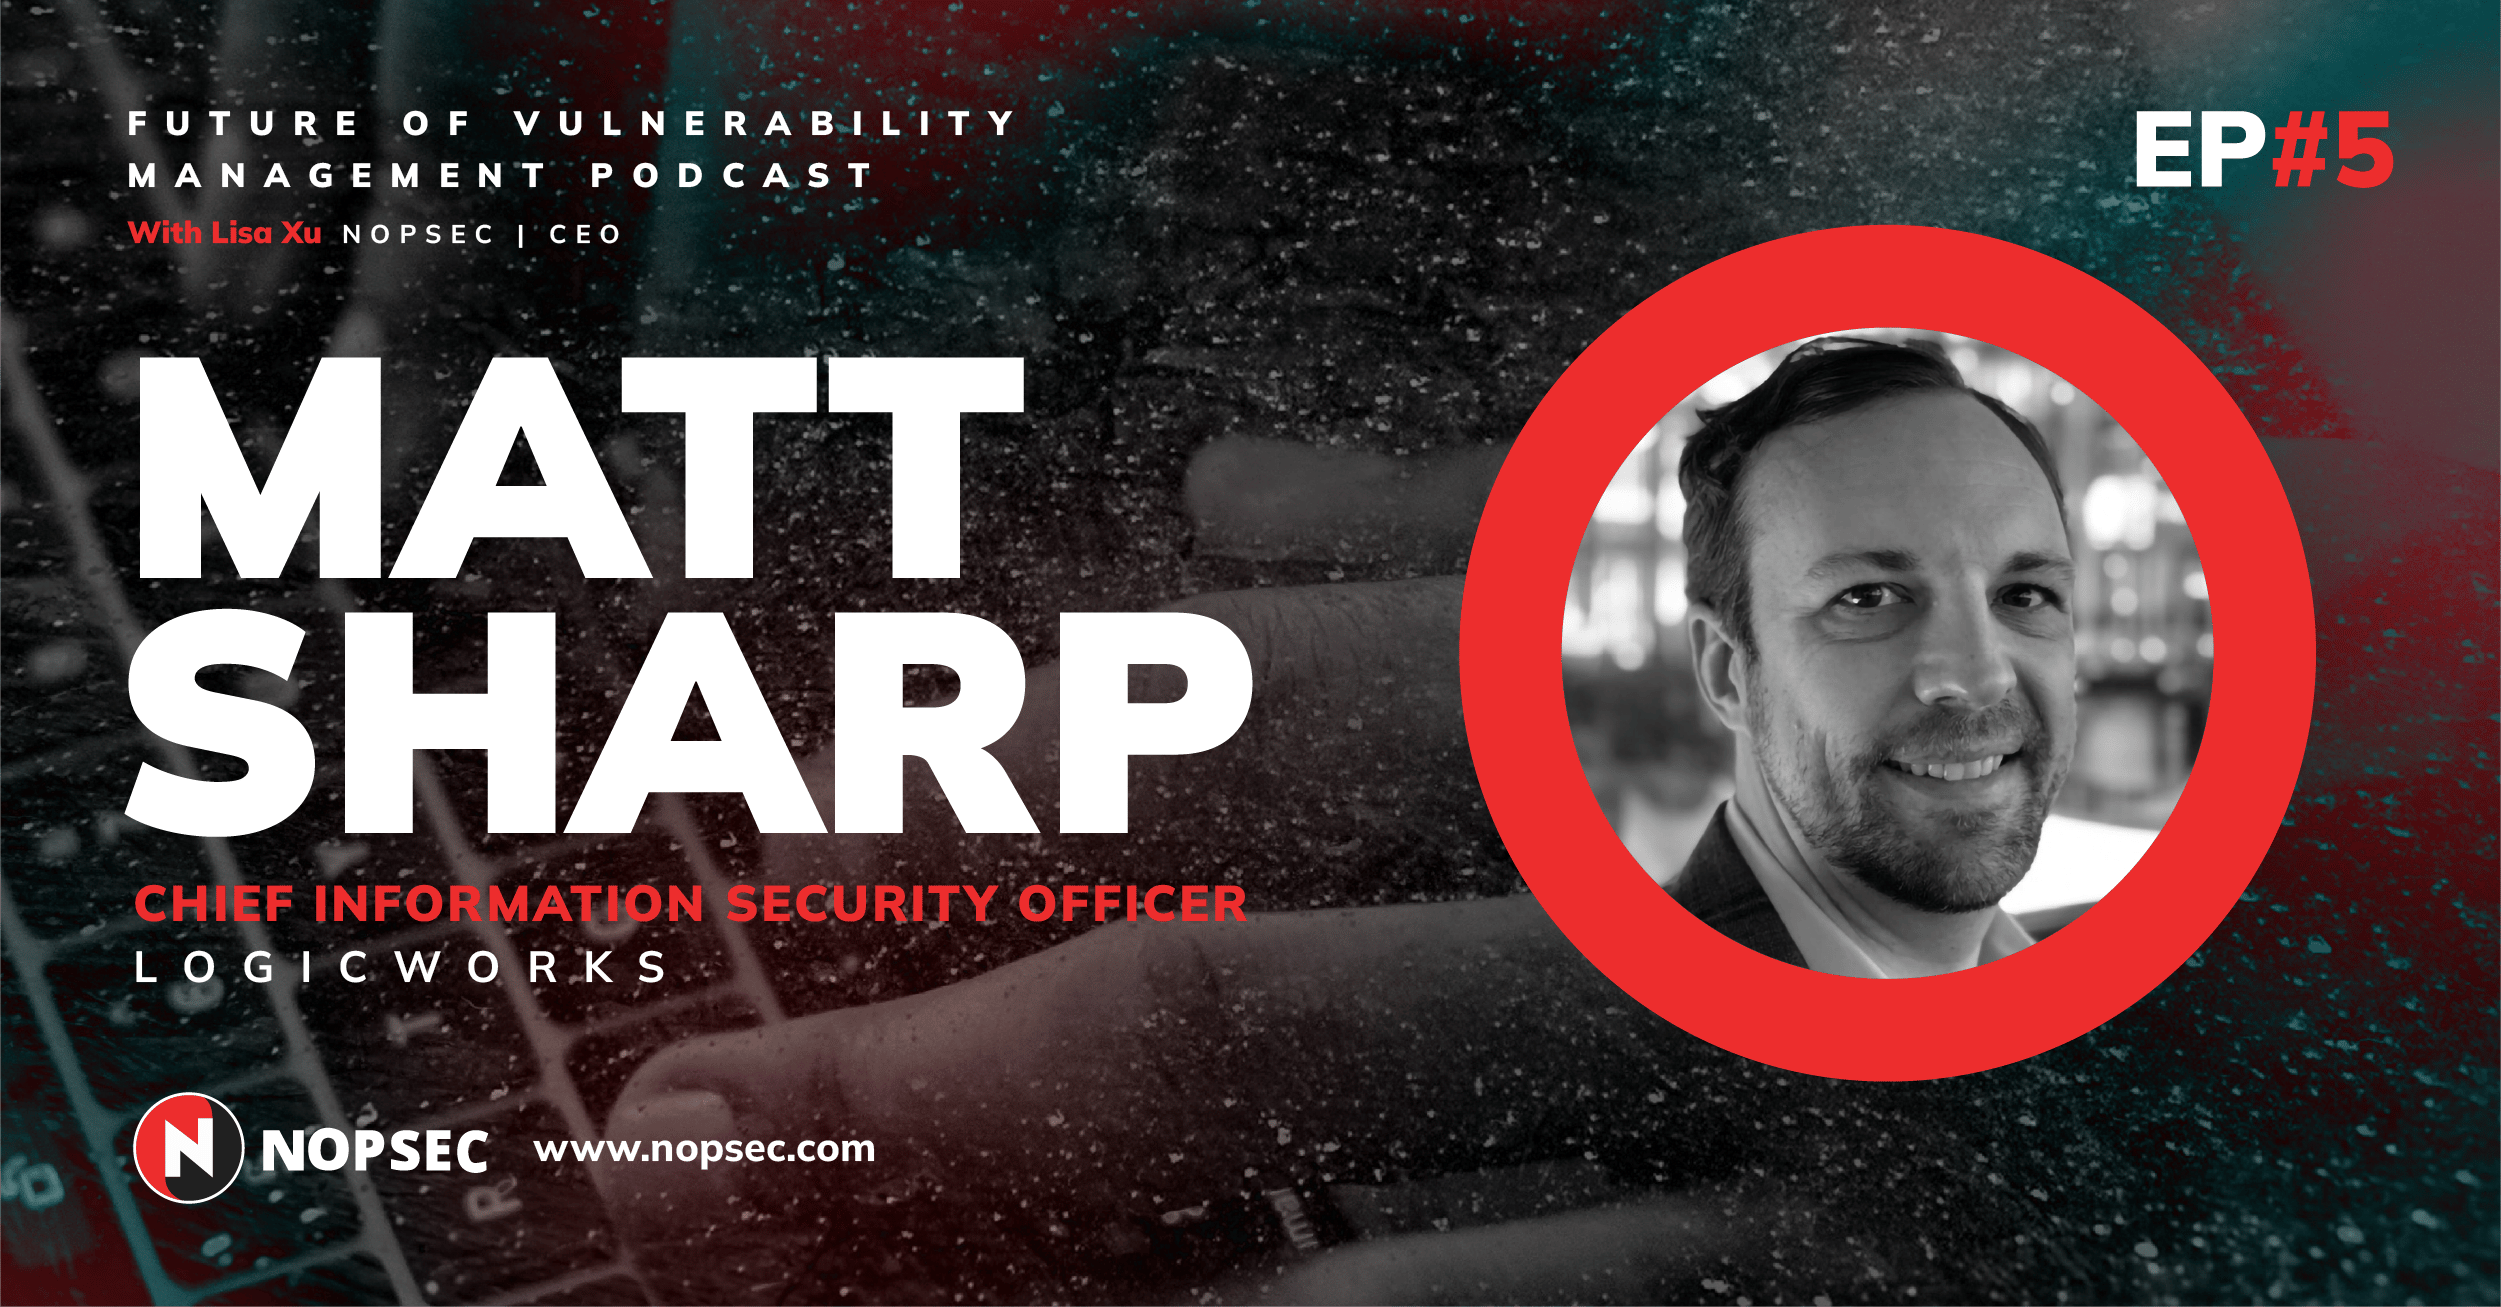 Future of Vulnerability Management Podcast Episode 5 Featuring Matt Sharp